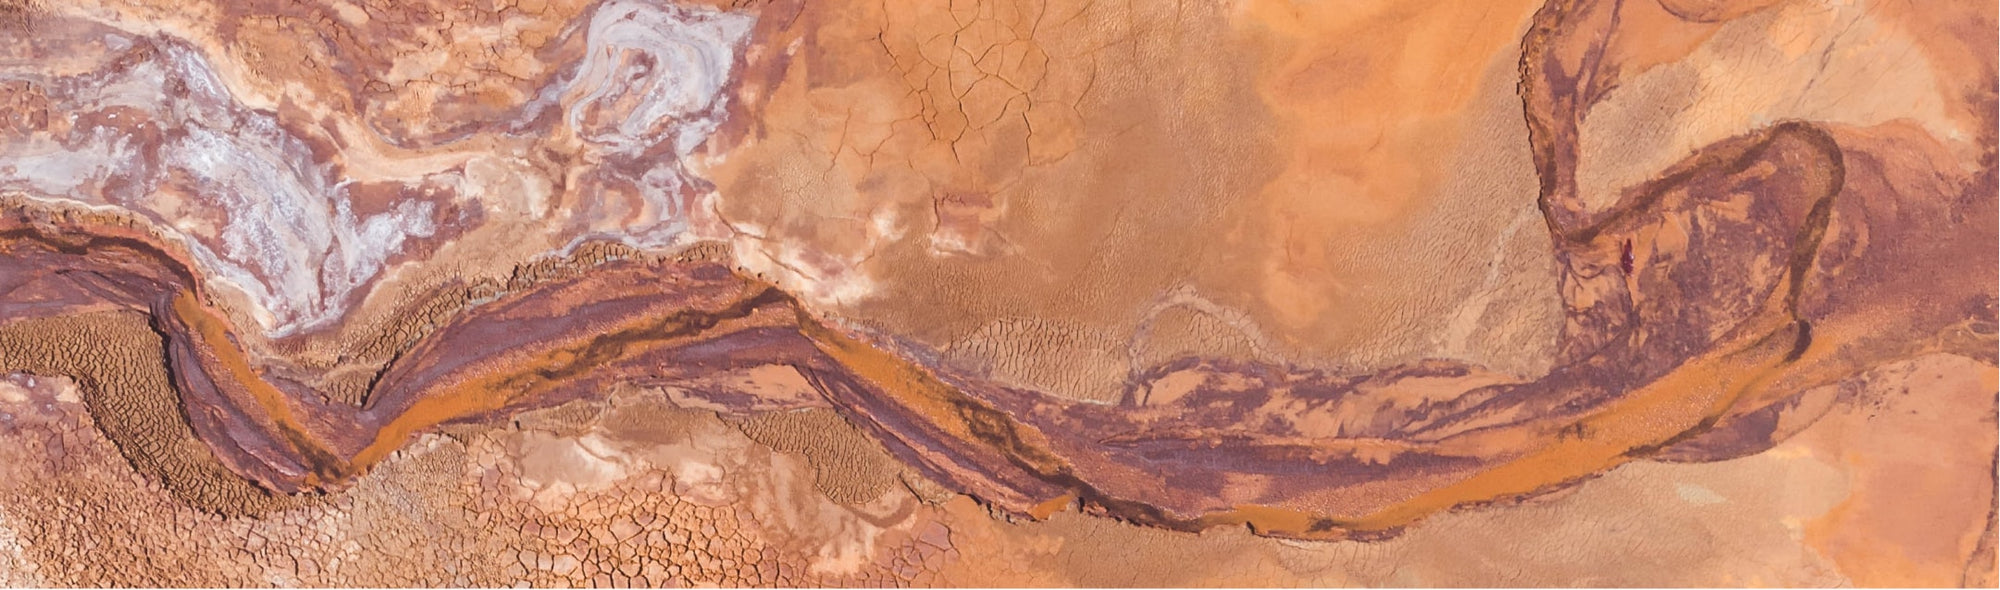 Satellite image of dessert land